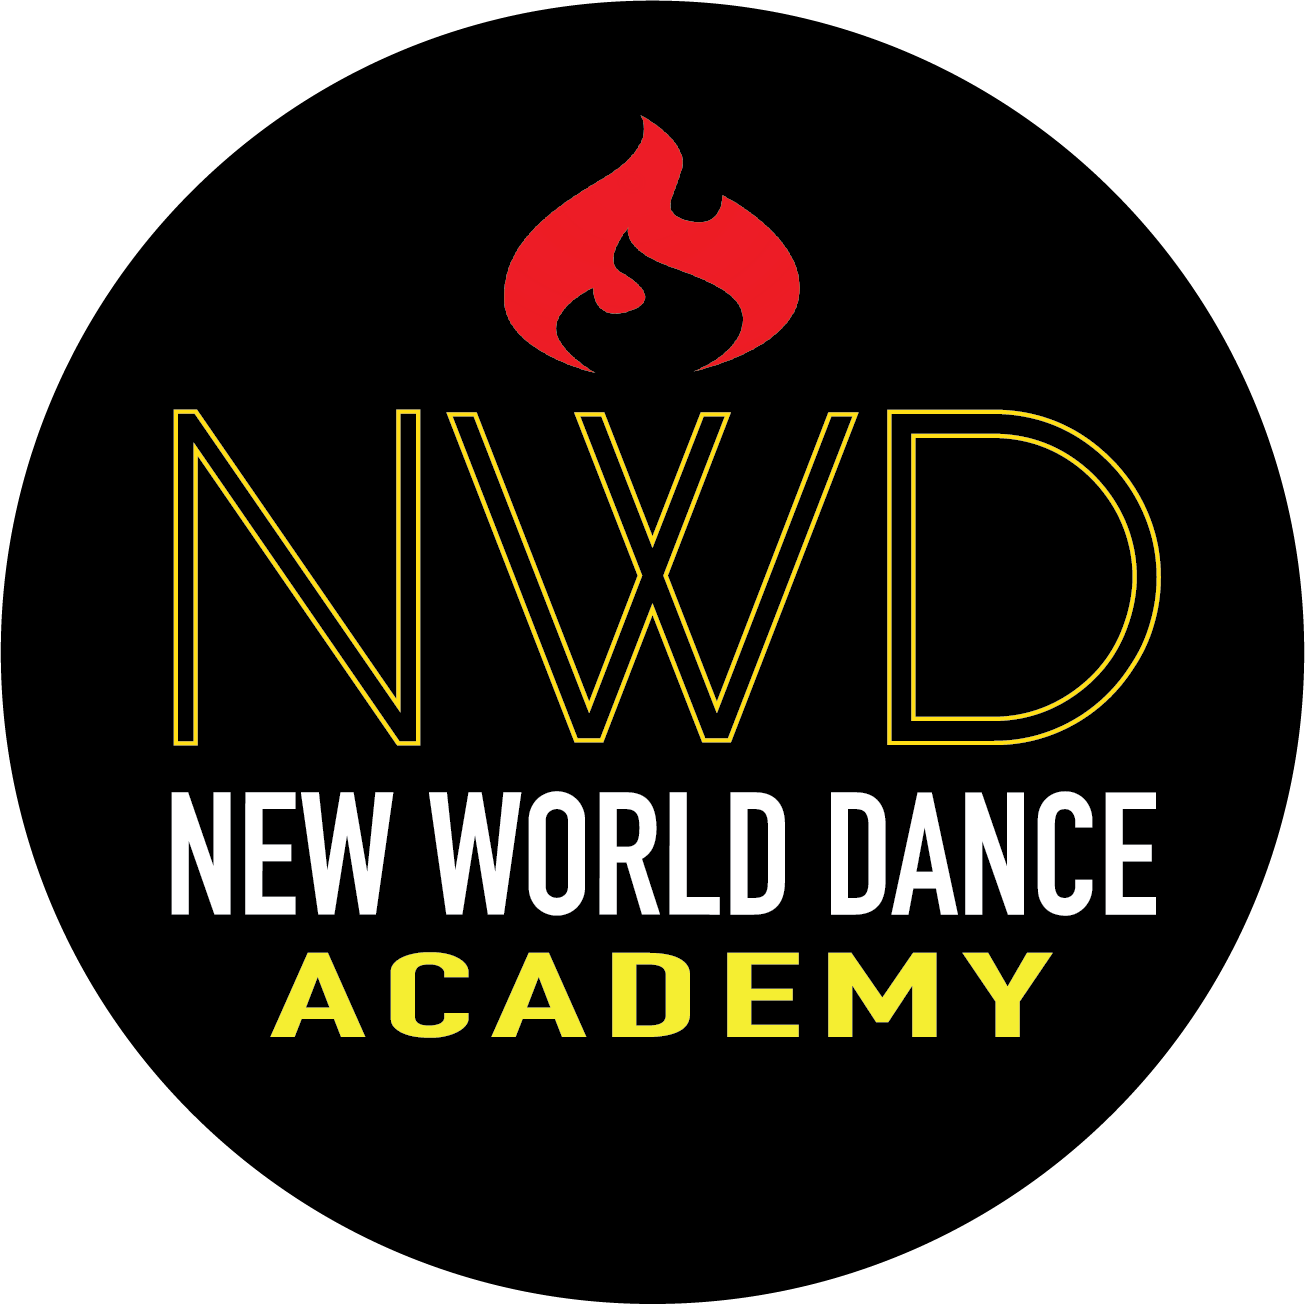 NEW WORLD DANCE ACADEMY